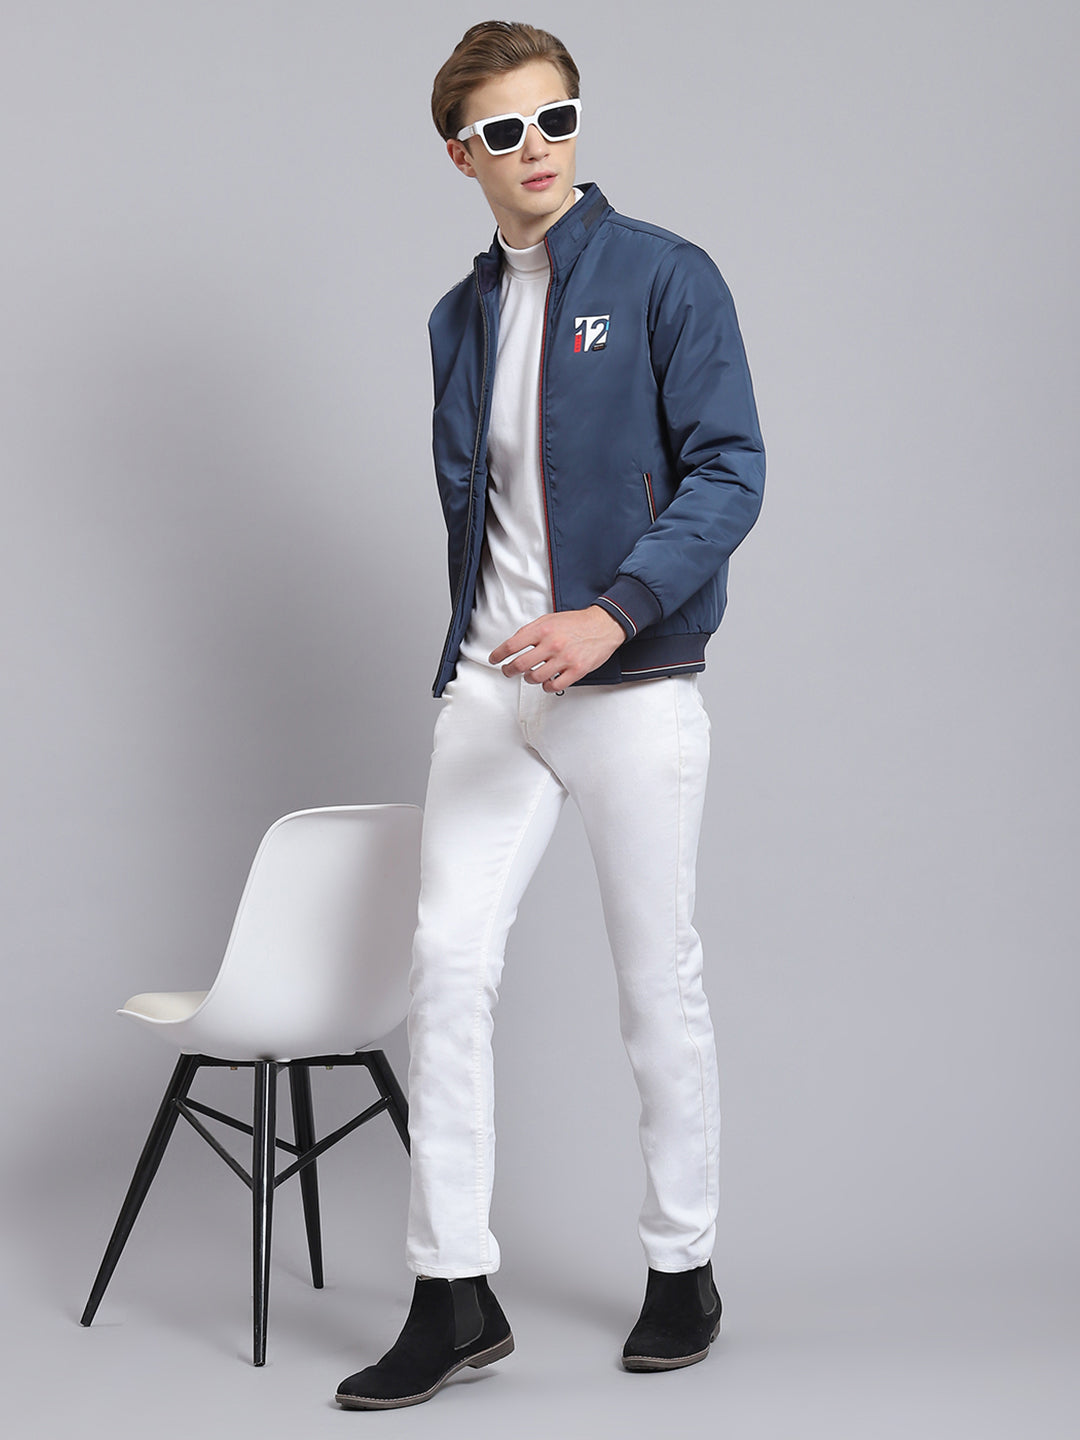 9 Different Men's Jacket Styles And Denim Jacket Outfit Ideas - Bewakoof  Blog